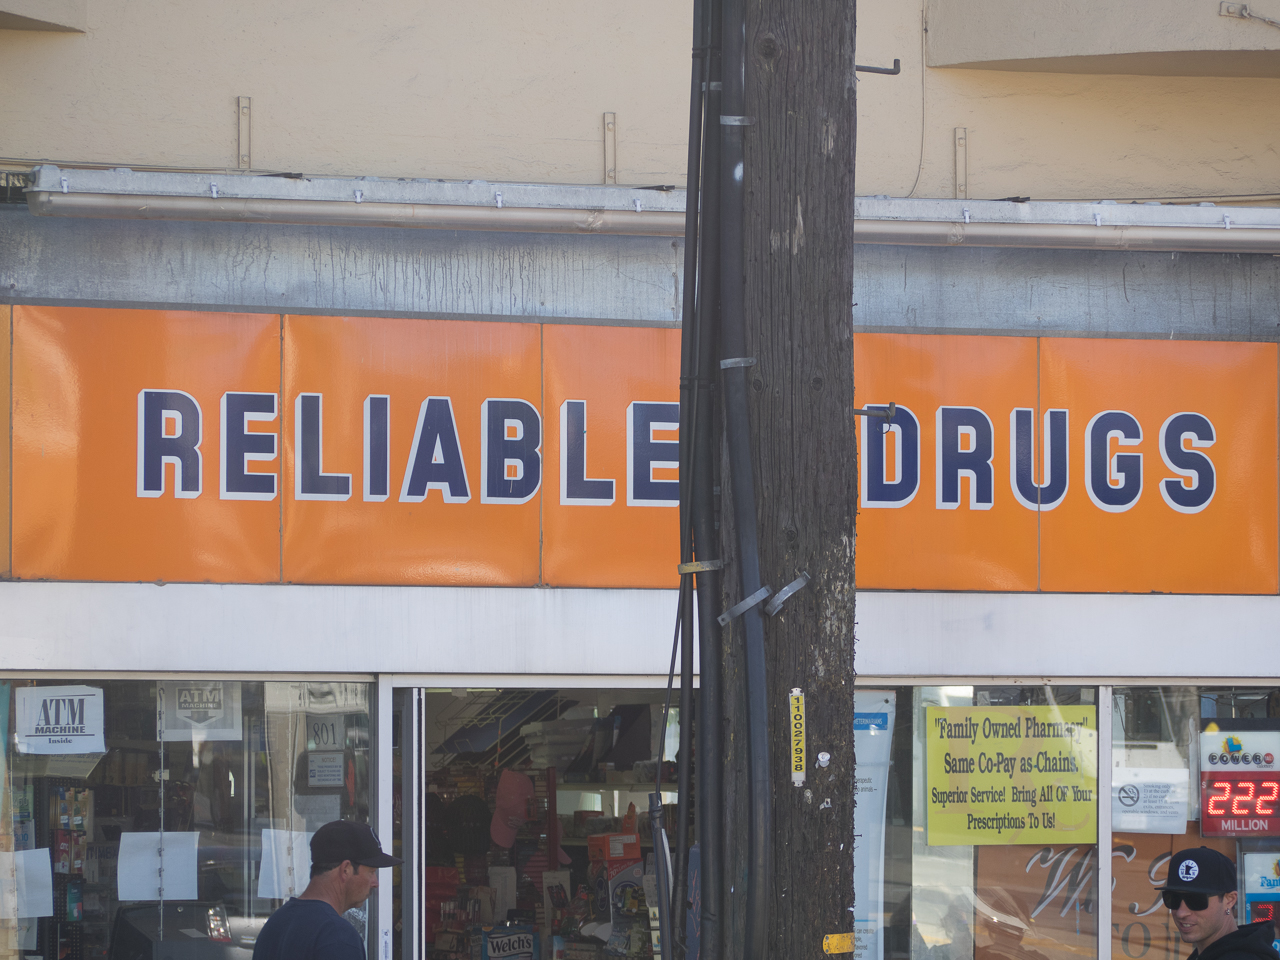 I, too, enjoy reliable drugs.